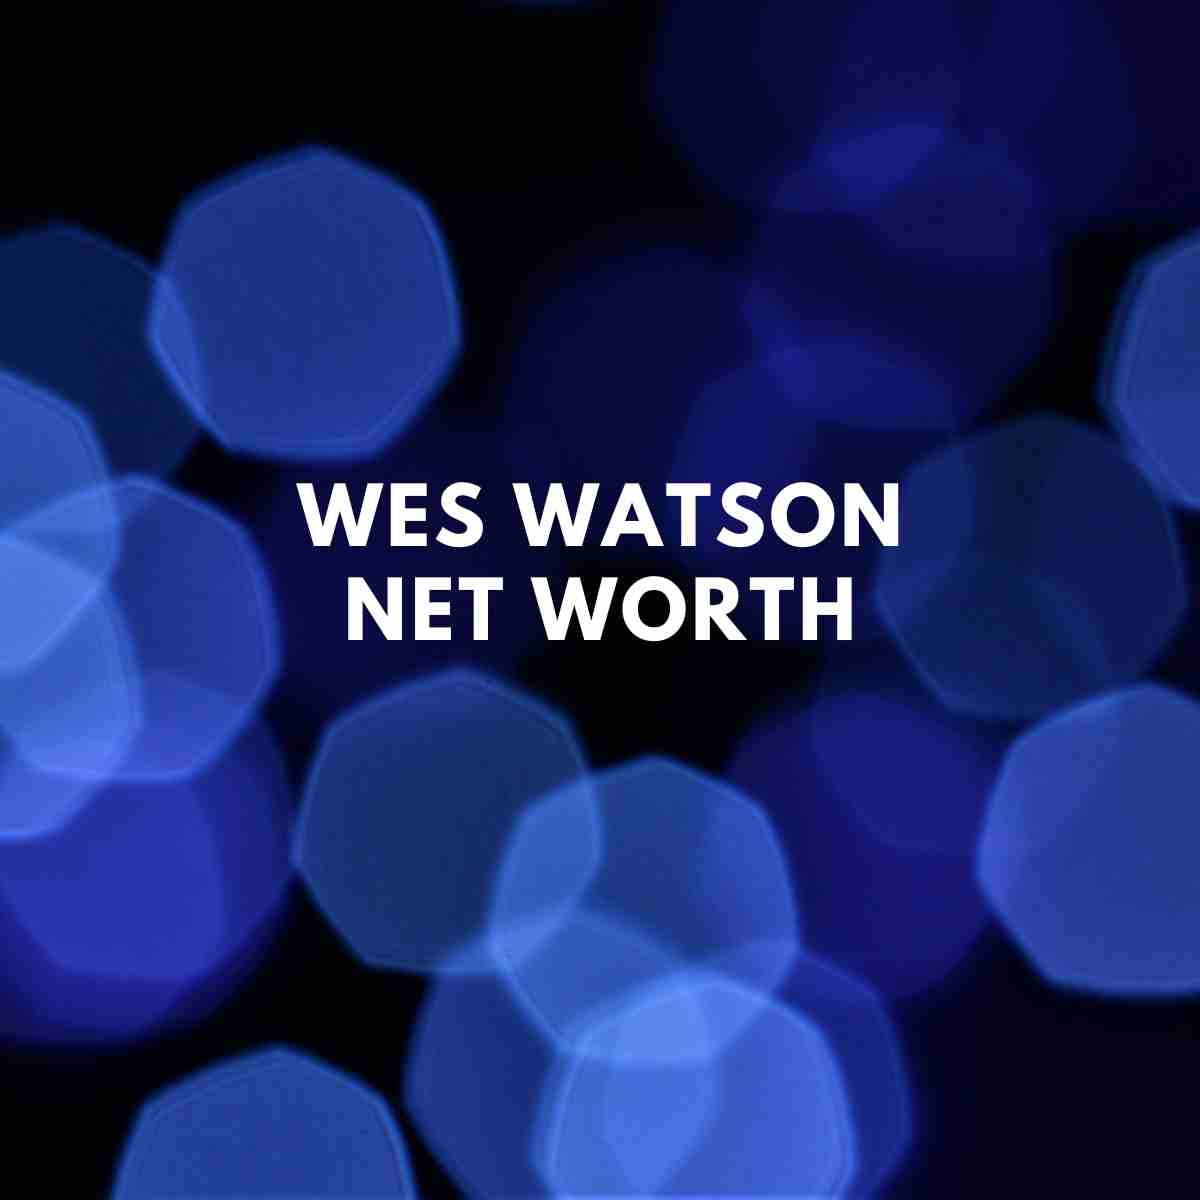 Wes Watson net worth